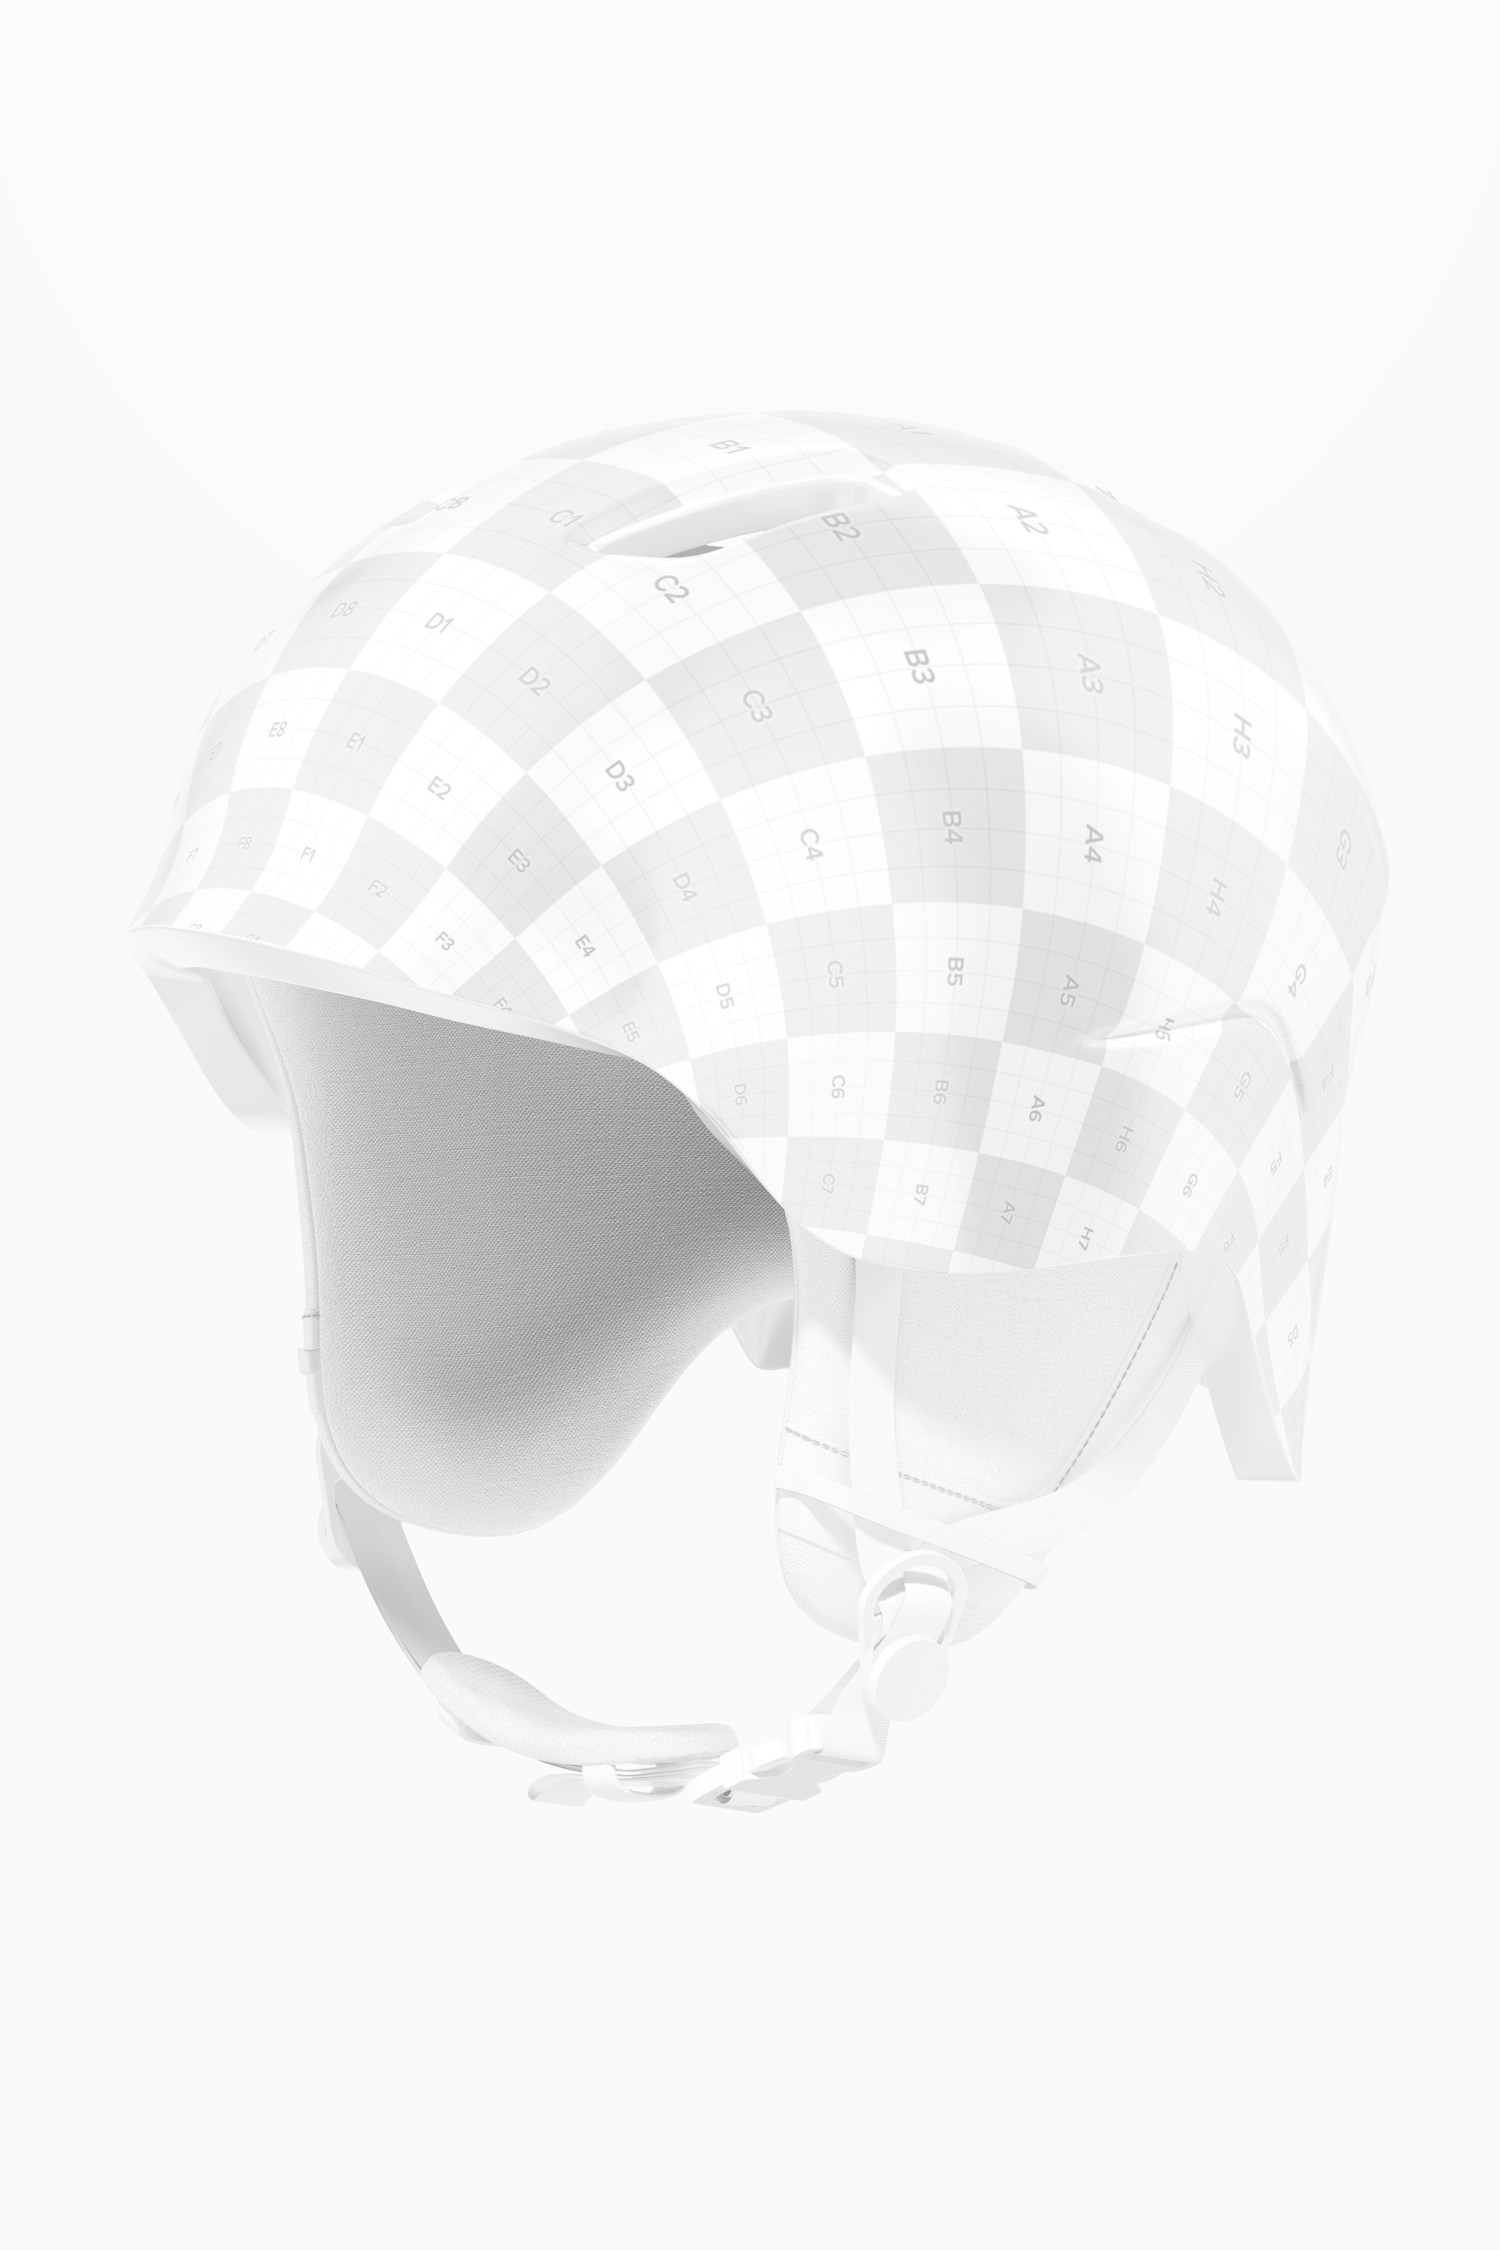 Winter Sports Helmet Mockup